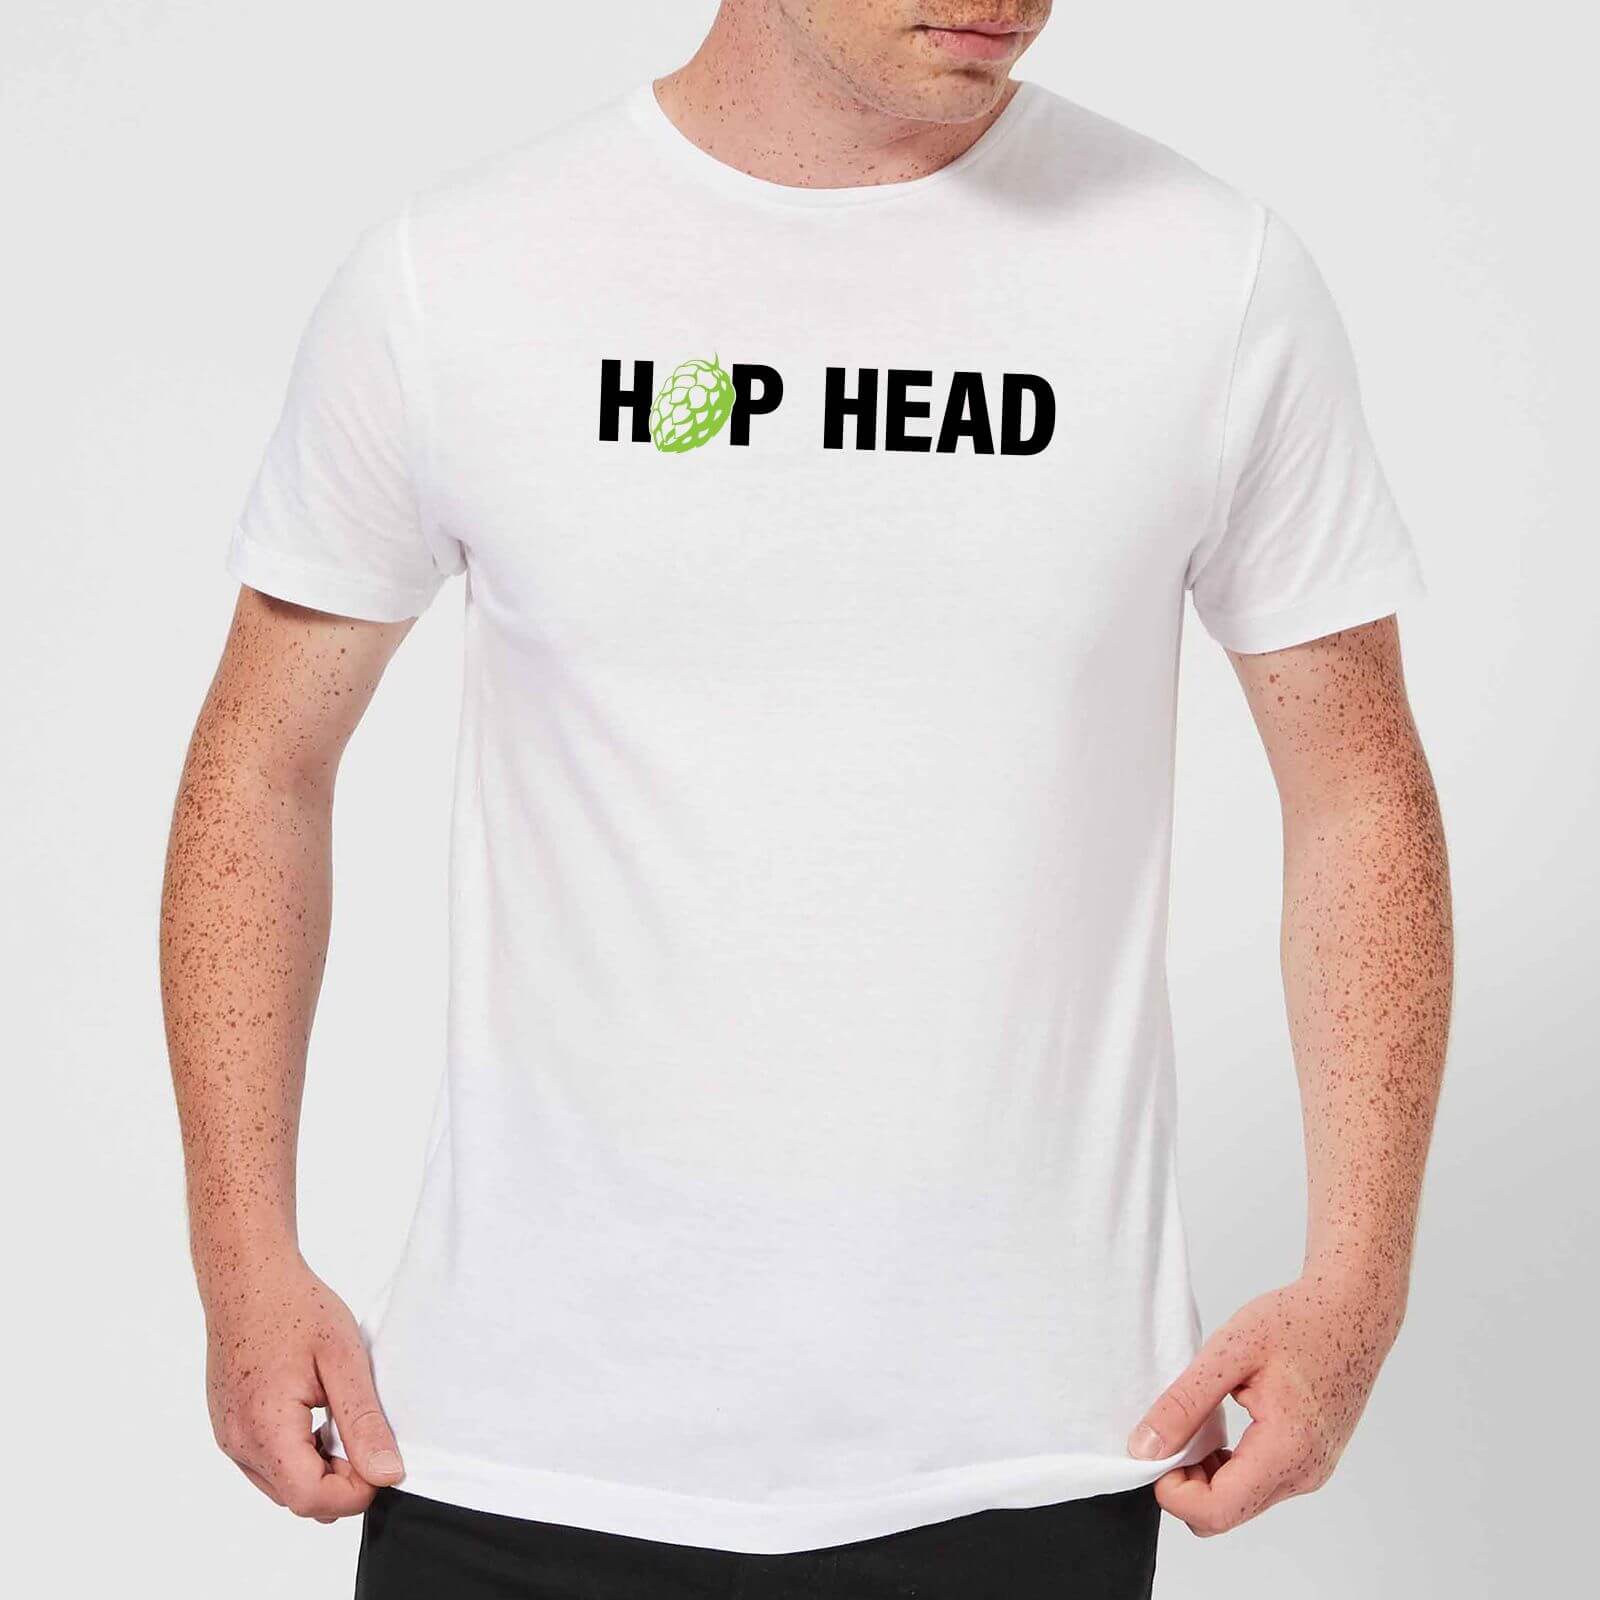 Beershield Hop Head Men's T-Shirt - S - White